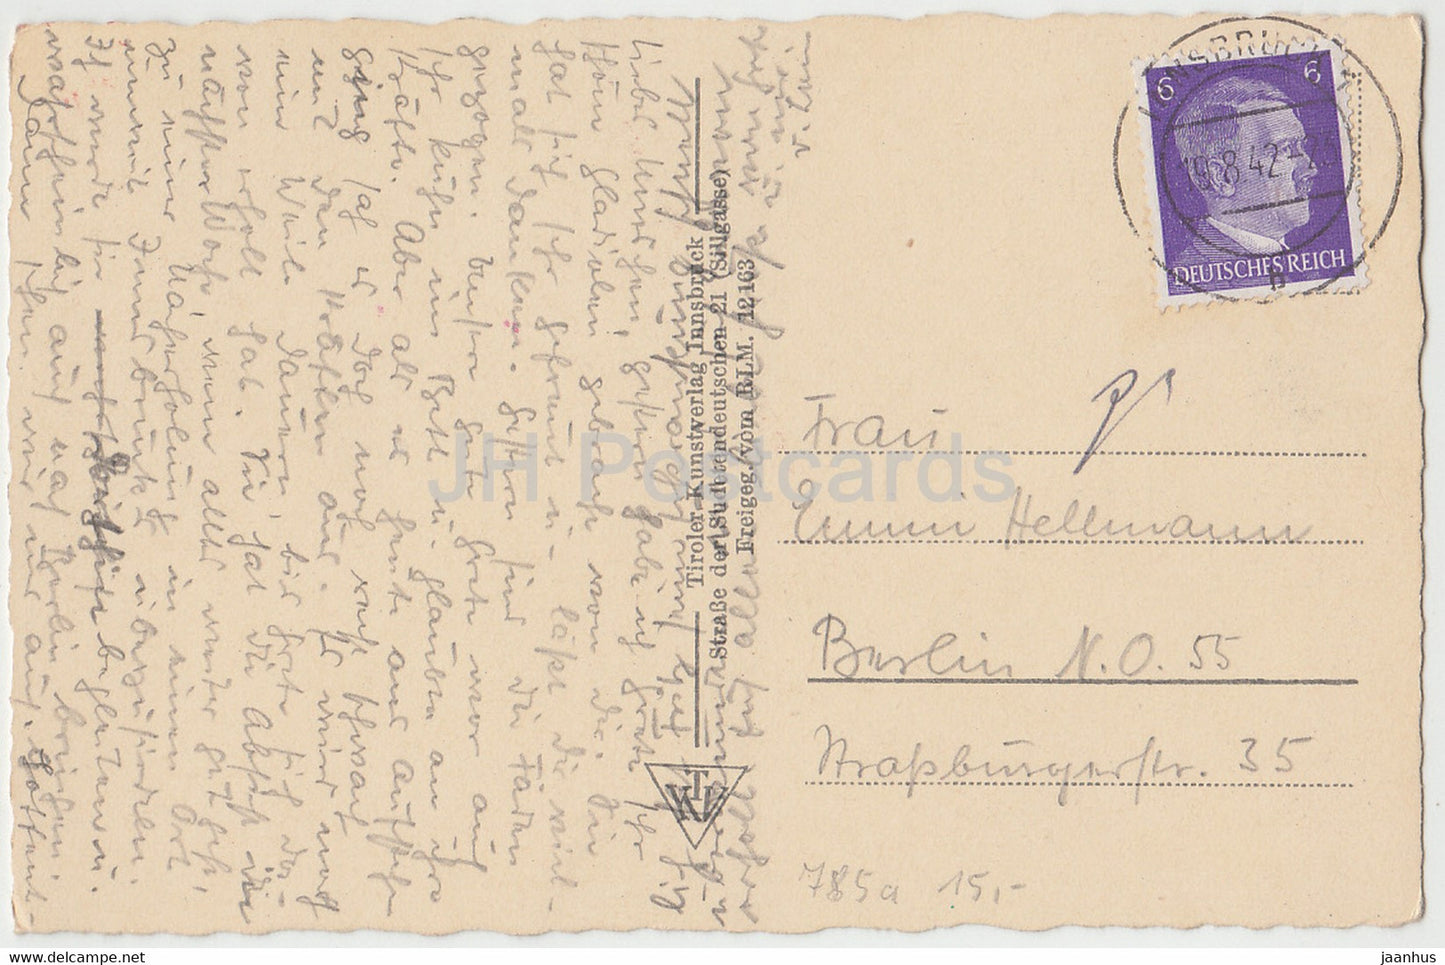 Innsbruck - Maria Theresienstrasse m Annasaule - old postcard - 1942 - Austria - used